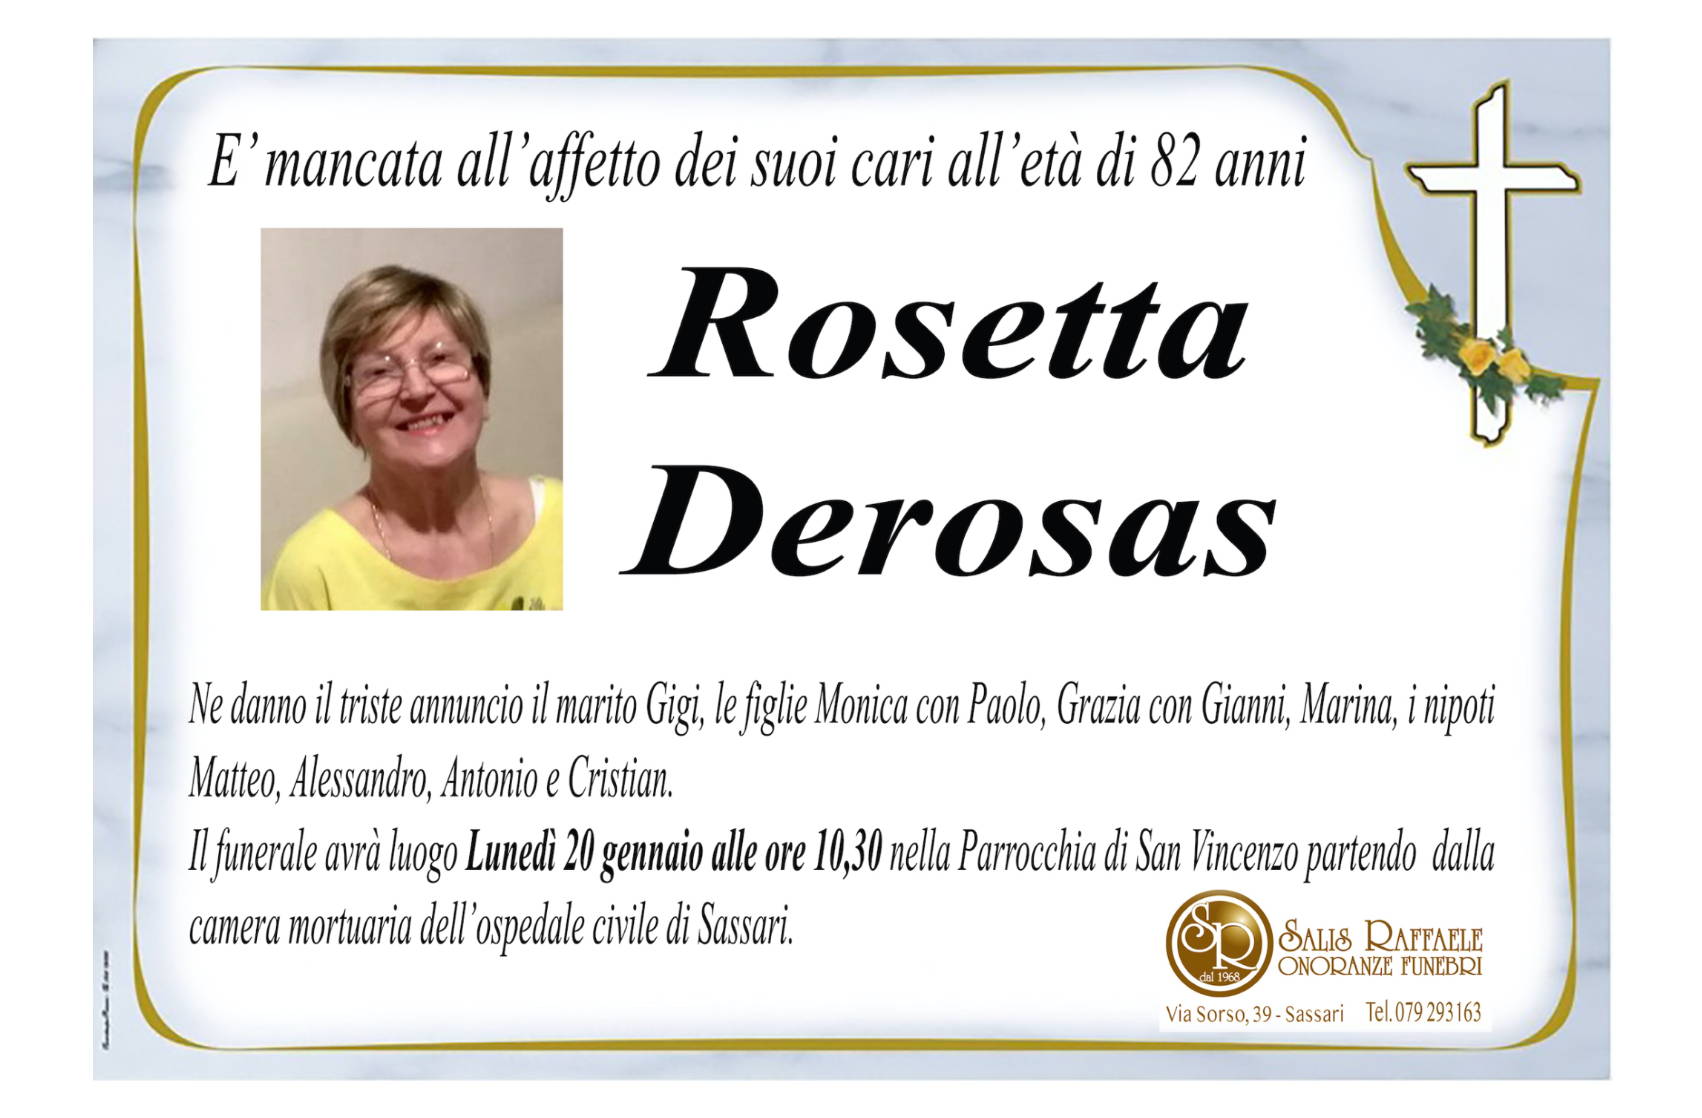 Rosetta Derosas